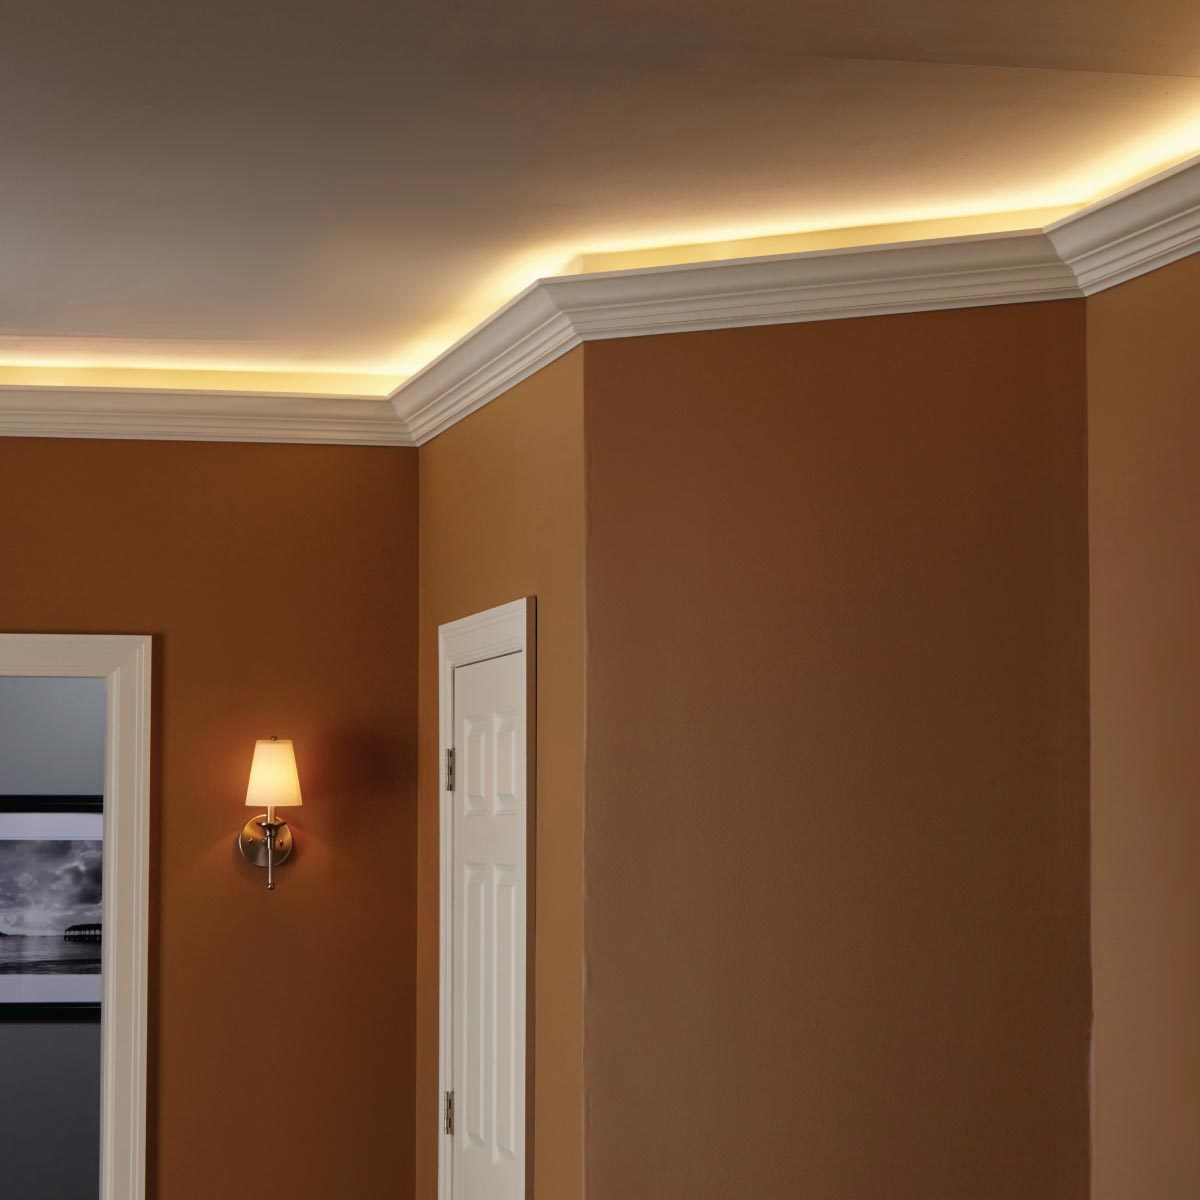 LED Profile For Plasterboard Ceiling Lighting For Sale